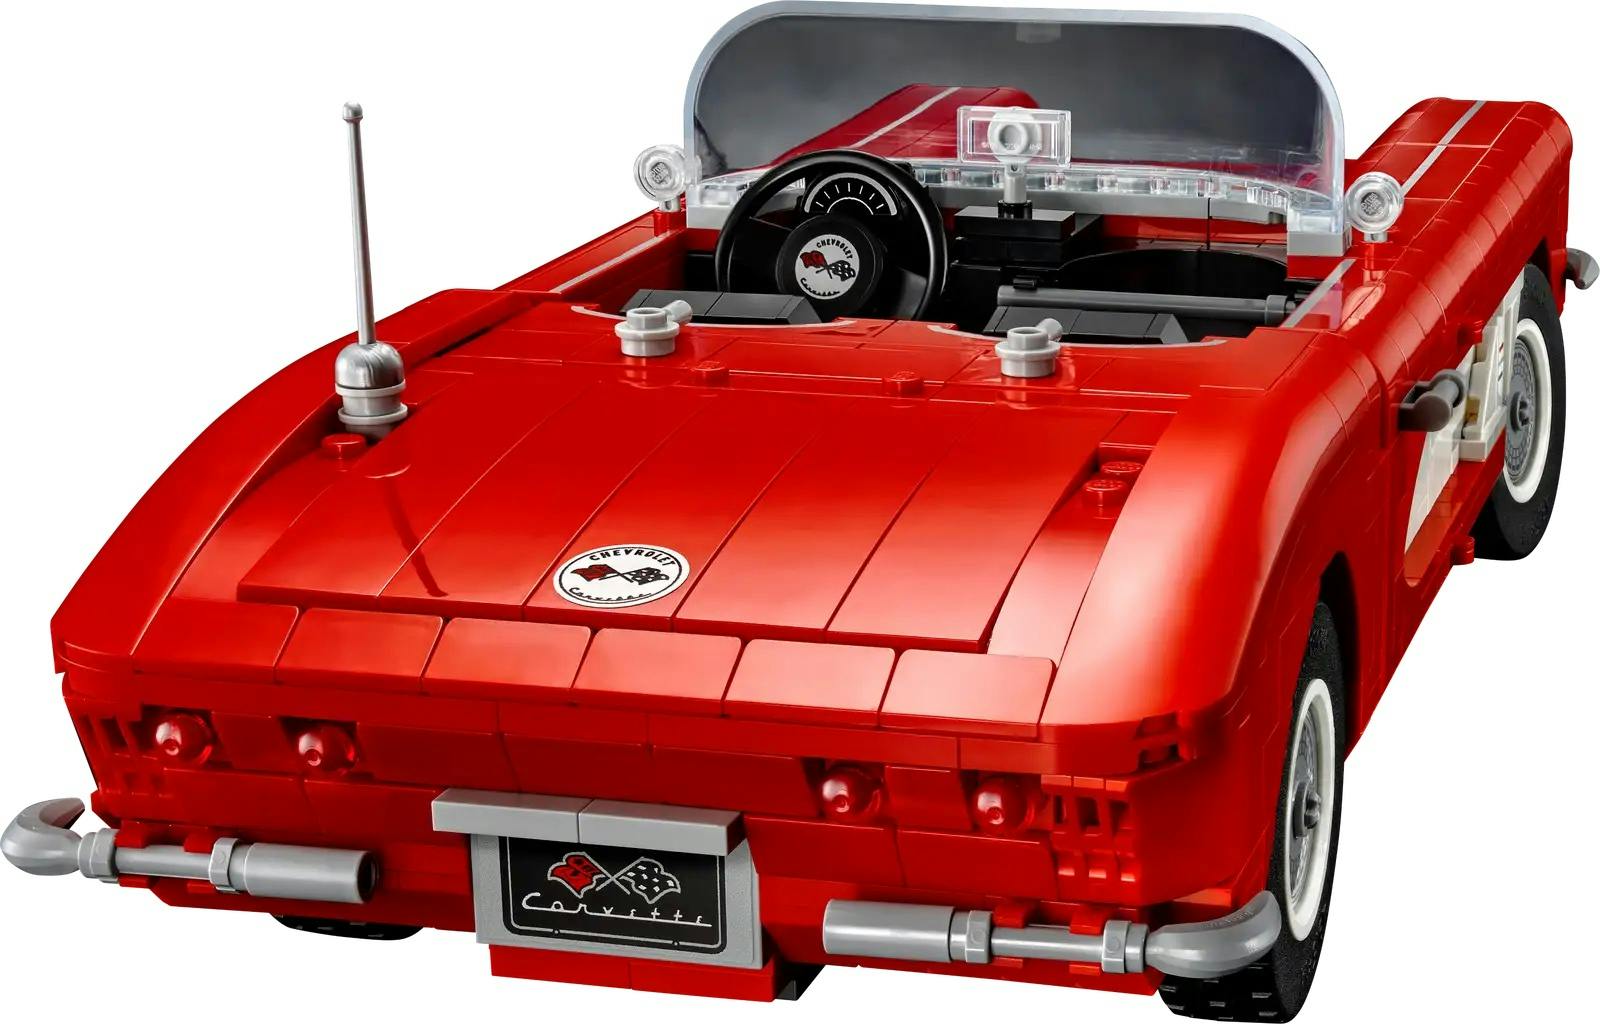 1961 LEGO Corvette rear three quarter